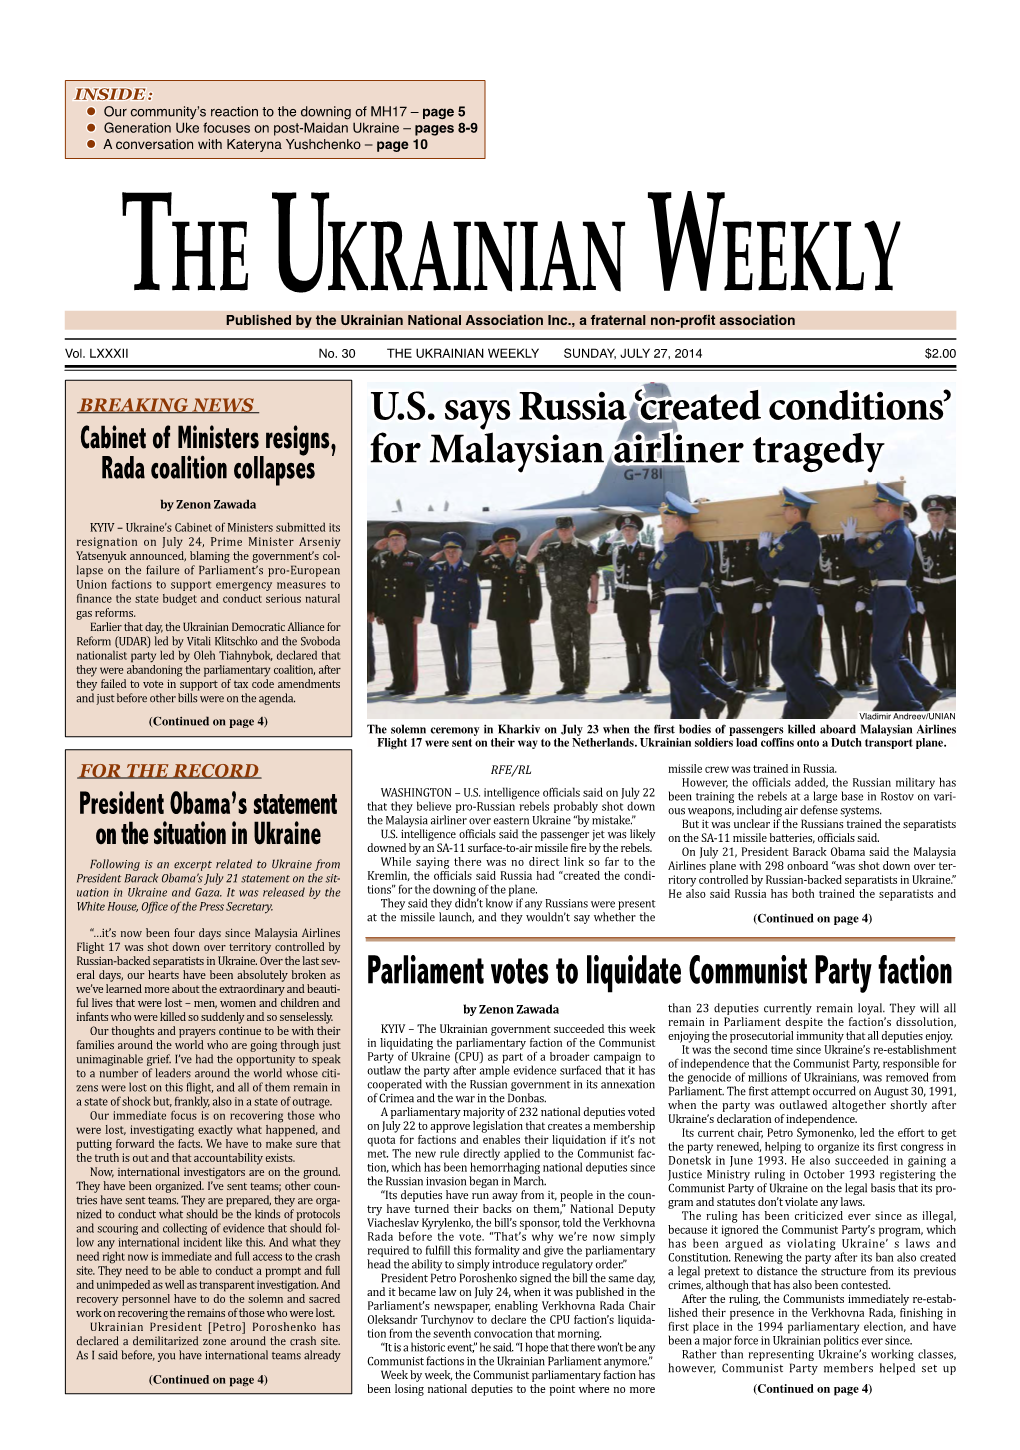 The Ukrainian Weekly 2014, No.30